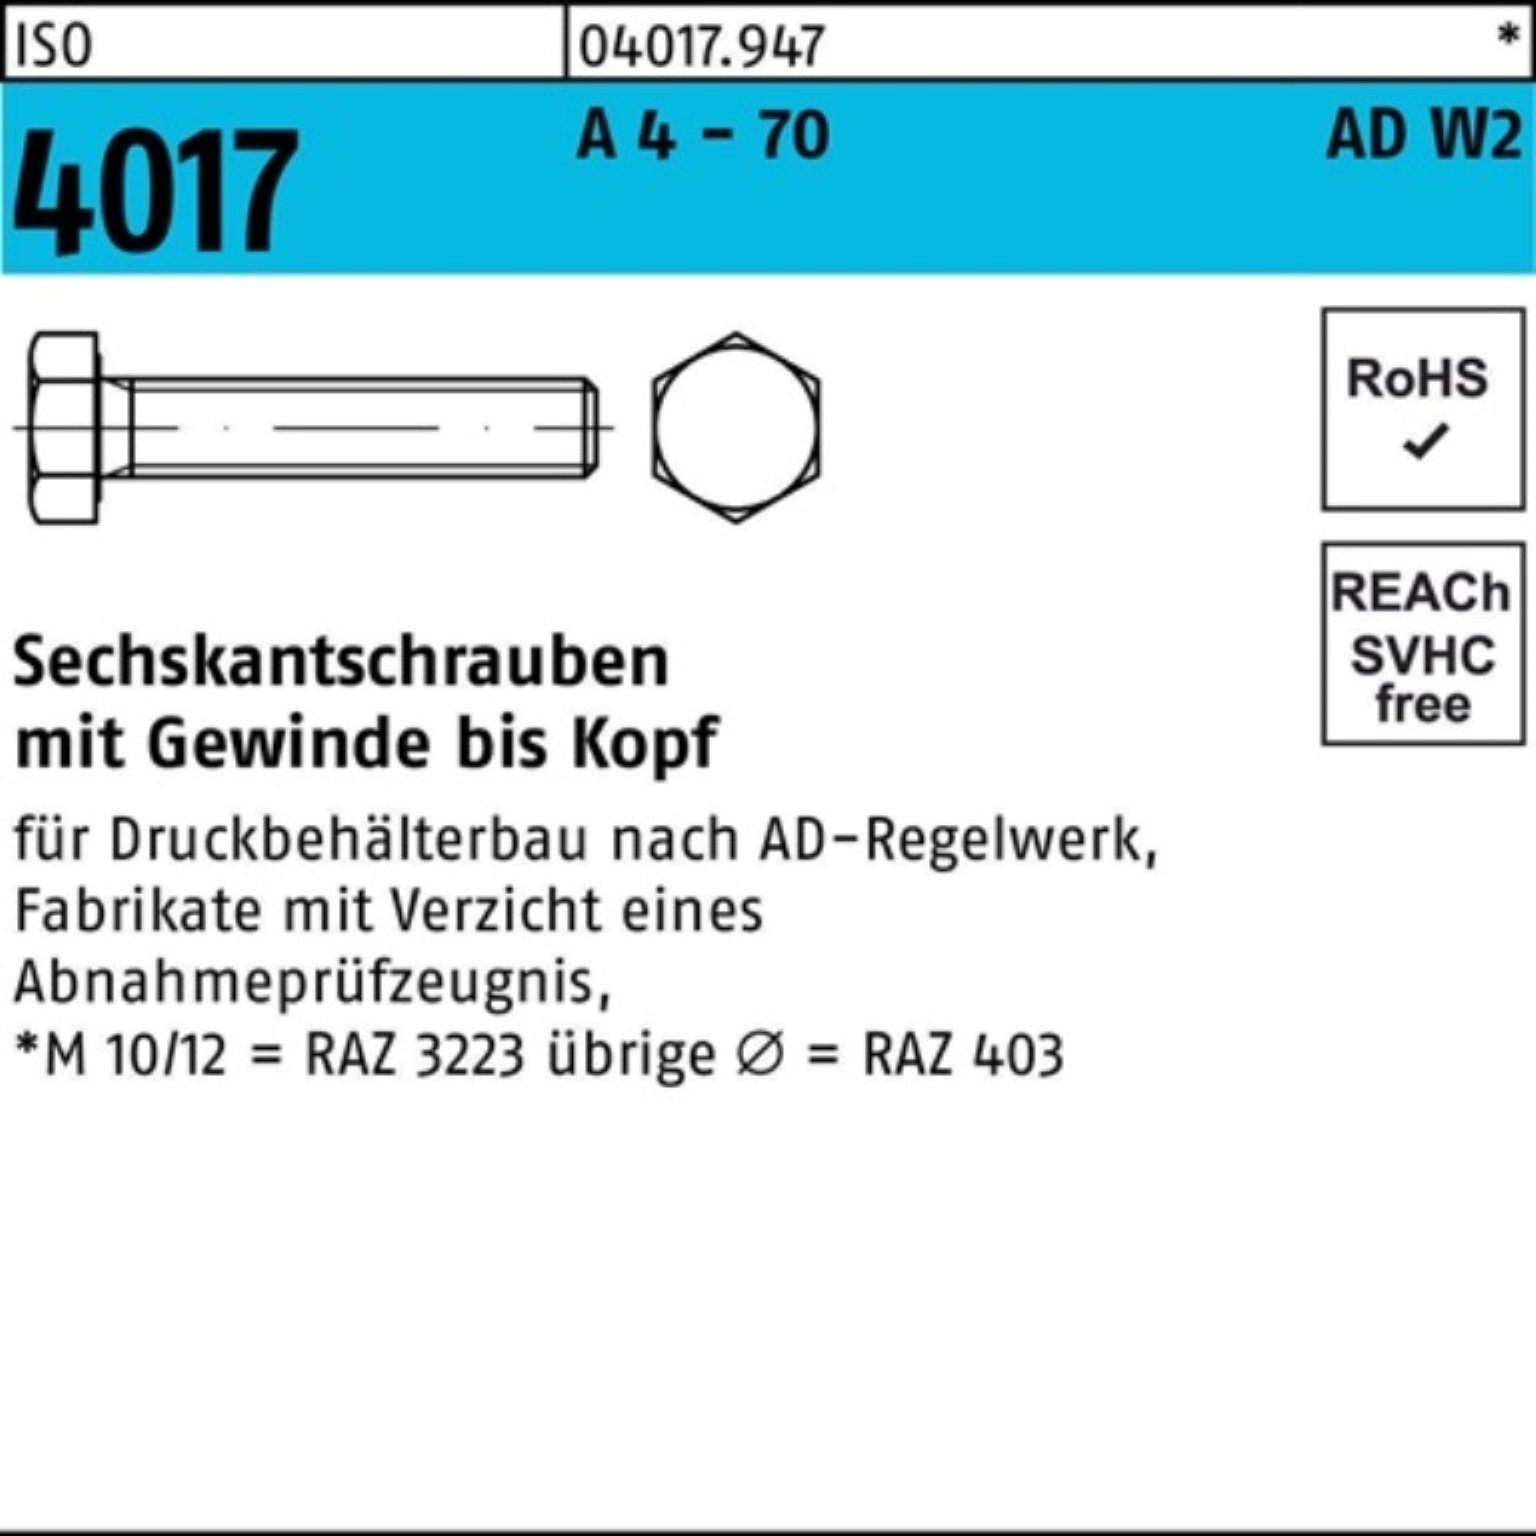 Bufab Sechskantschraube 4017 100er 70 M5x ISO VG AD-W2 St Pack 4 10 100 A - Sechskantschraube